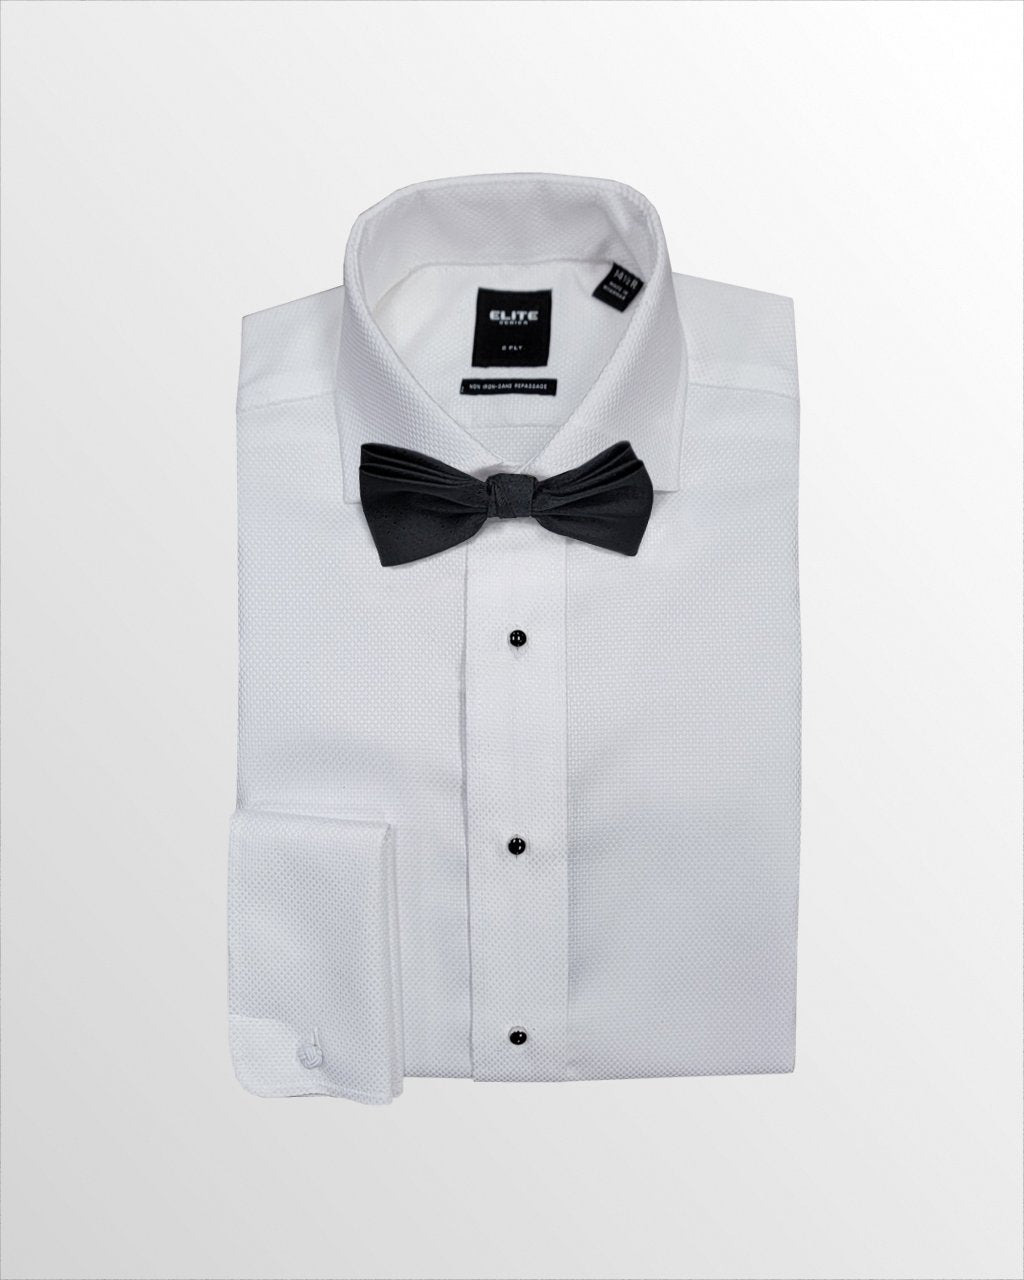 Serica Elite Tuxedo Shirt – White